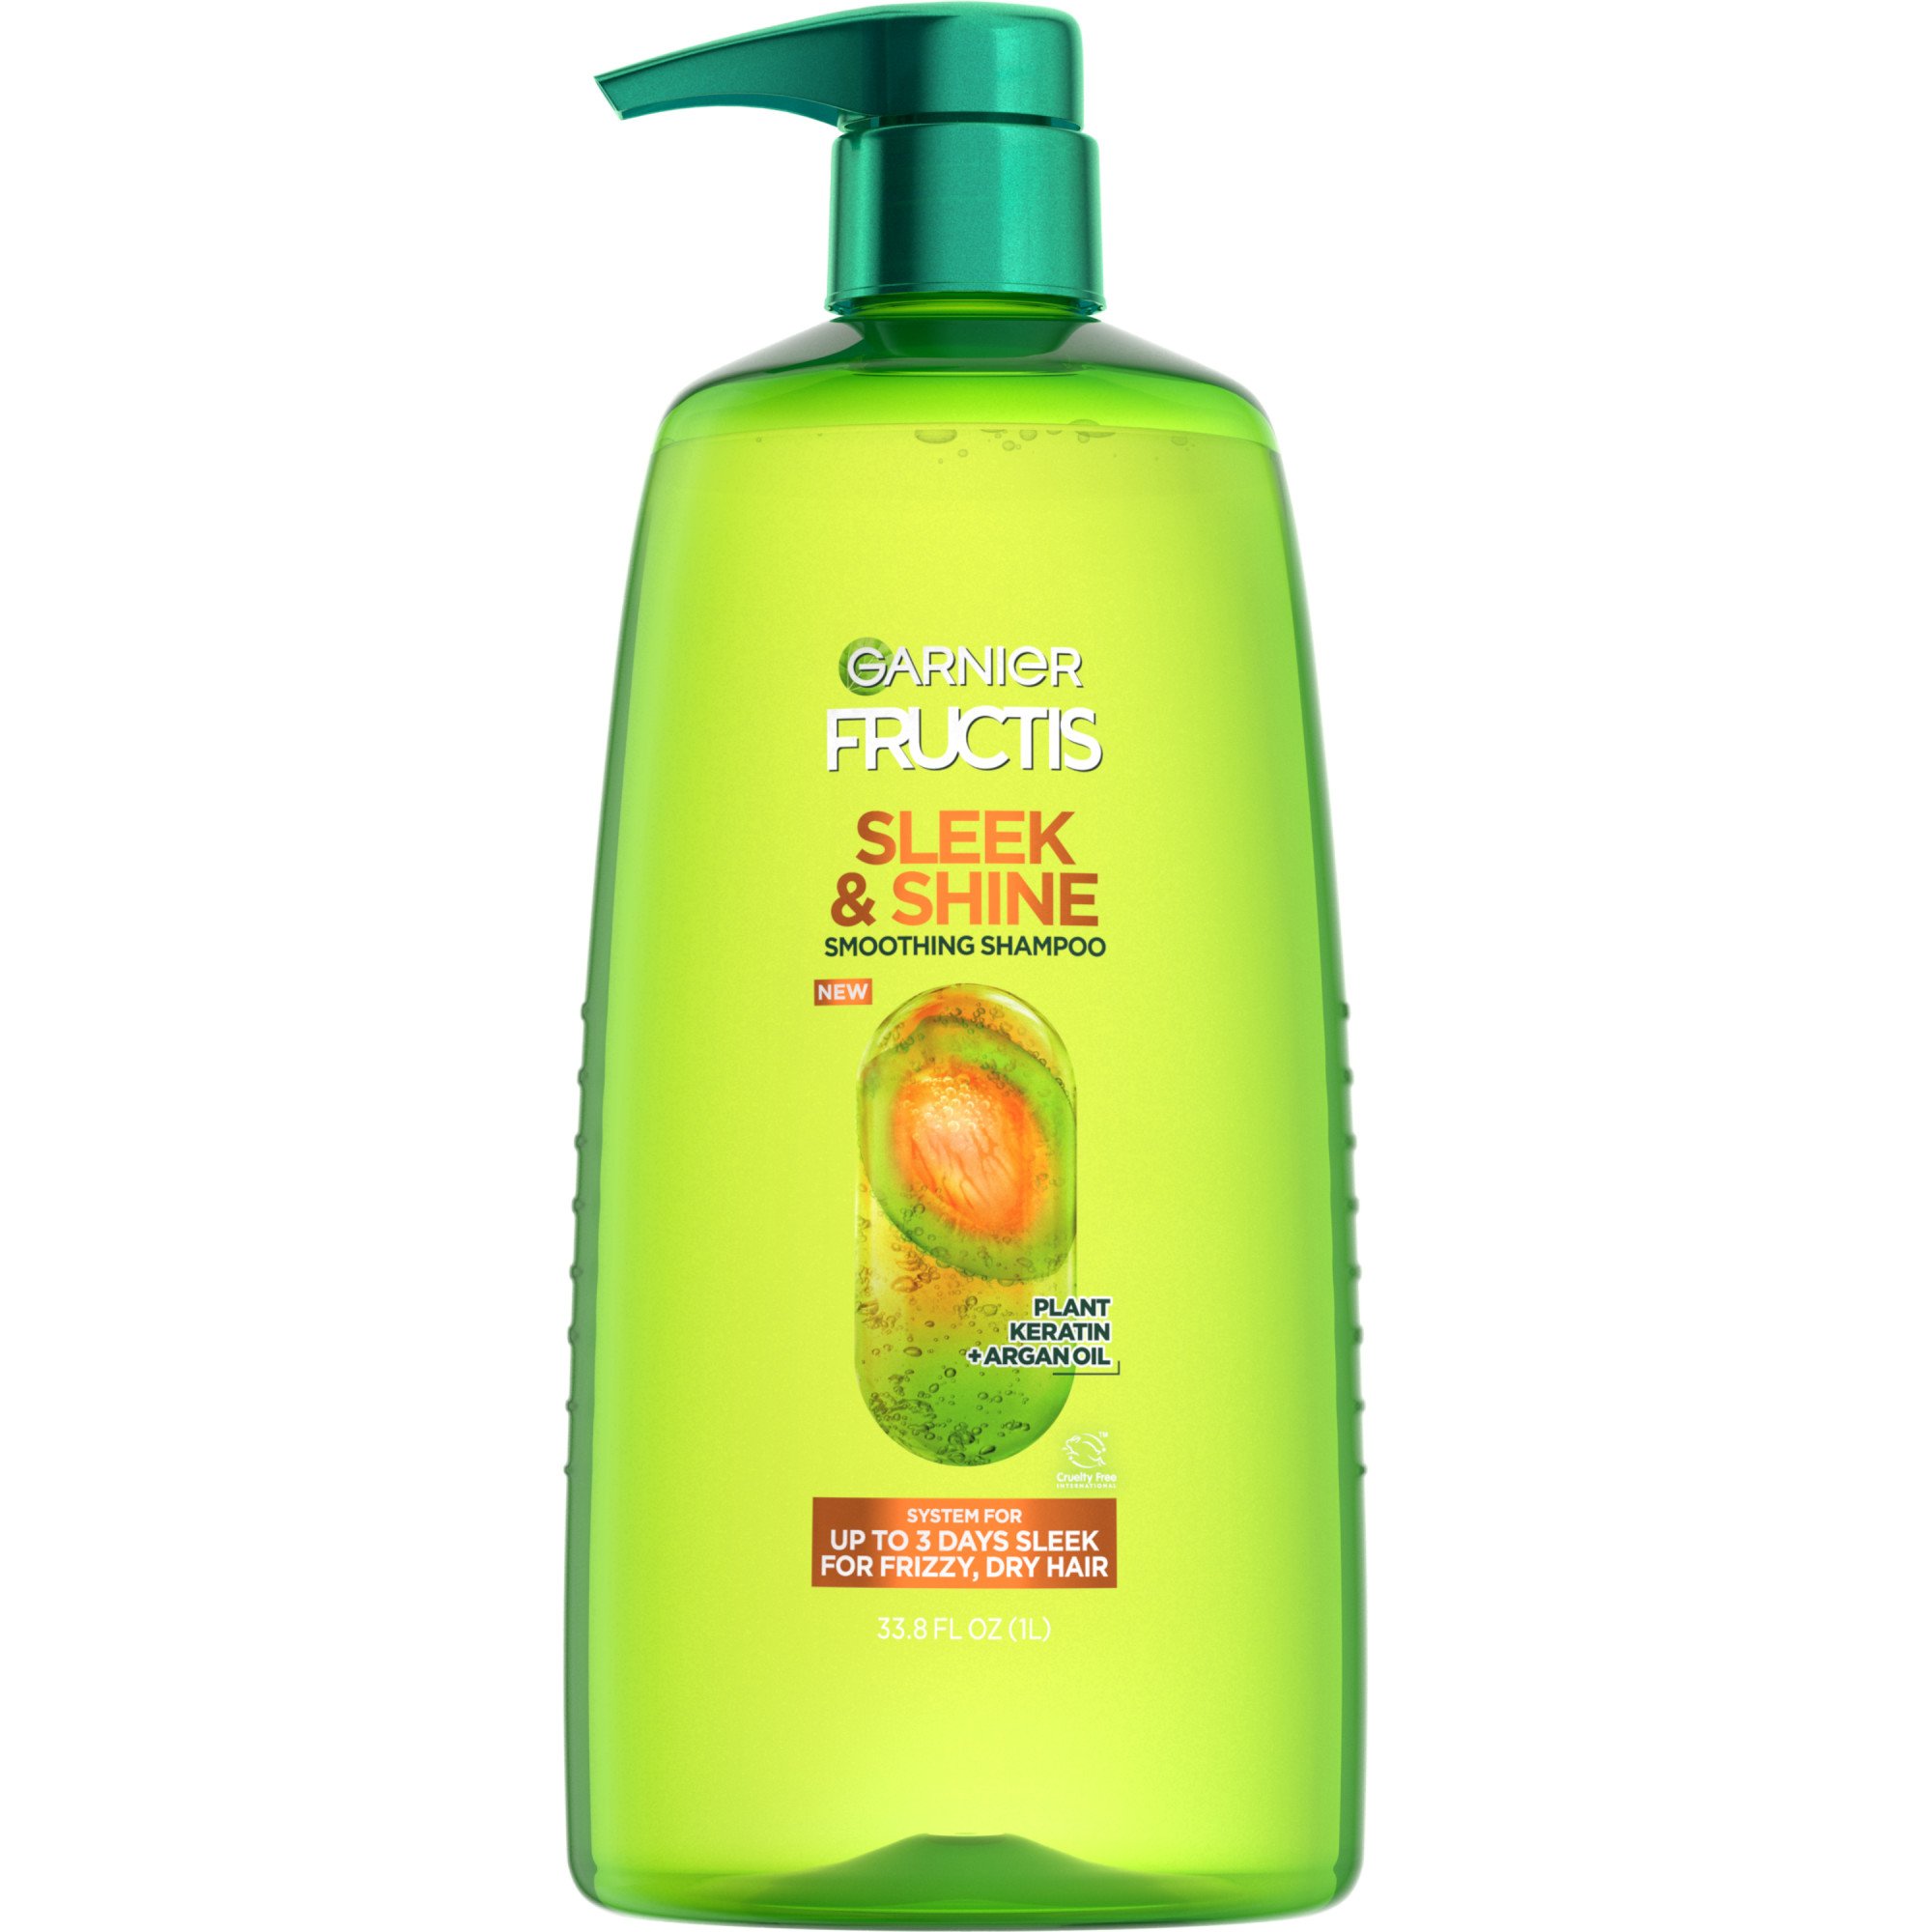 Ampere sukker usund Garnier Fructis Sleek & Shine Smoothing Shampoo - Shop Hair Care at H-E-B